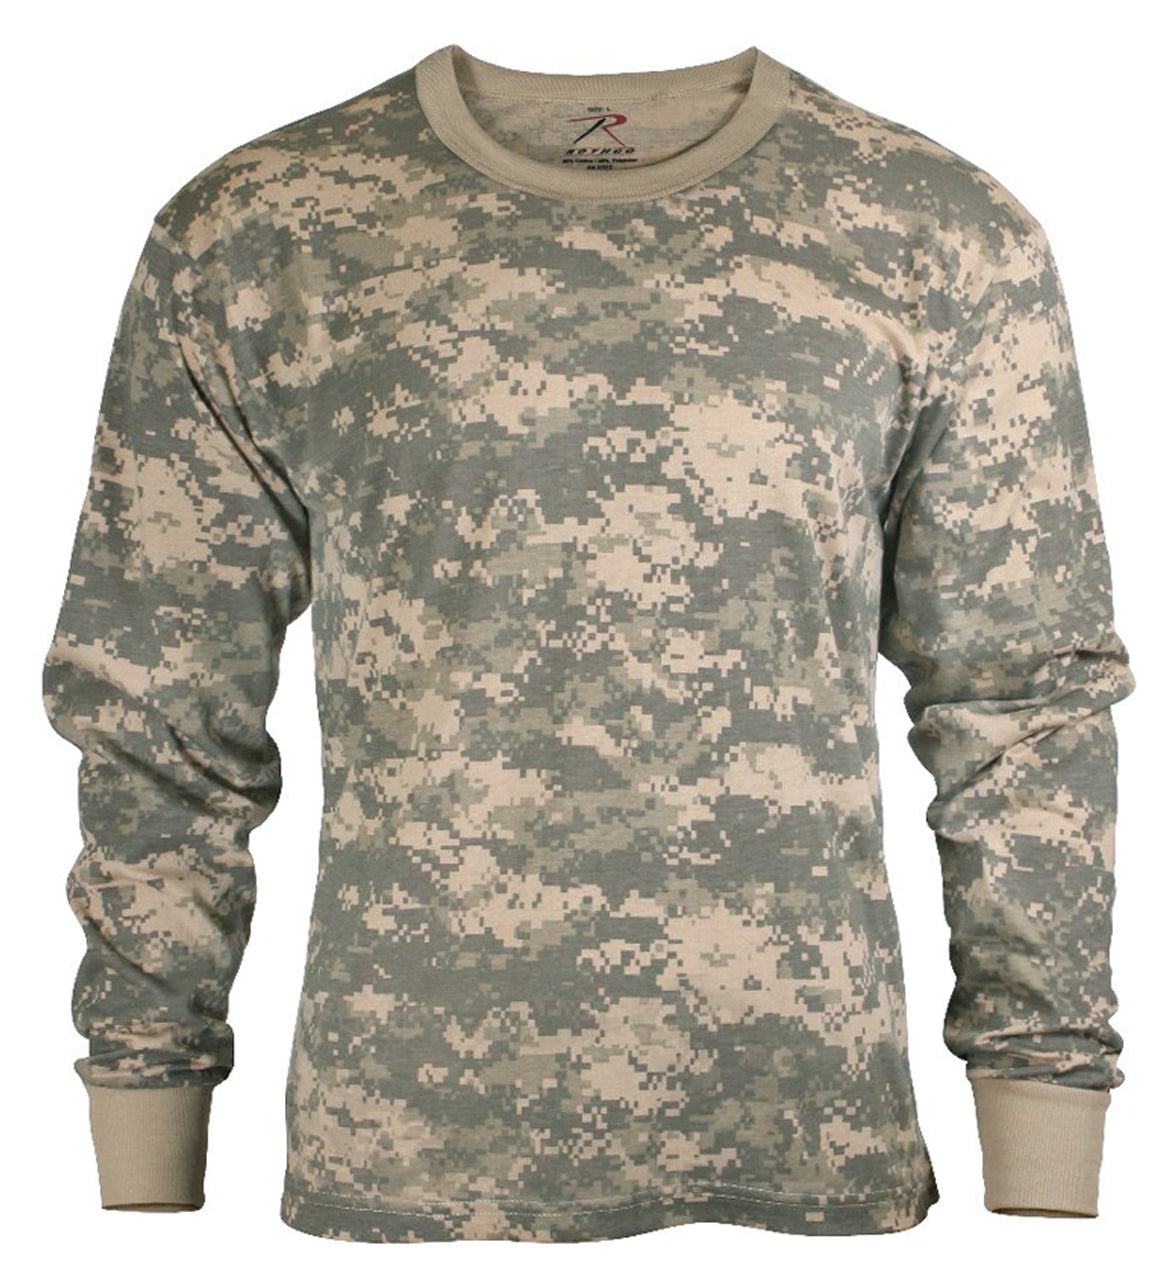 Milspec Long Sleeve Digital Camo T-Shirt Camo T-Shirts MilTac Tactical Military Outdoor Gear Australia